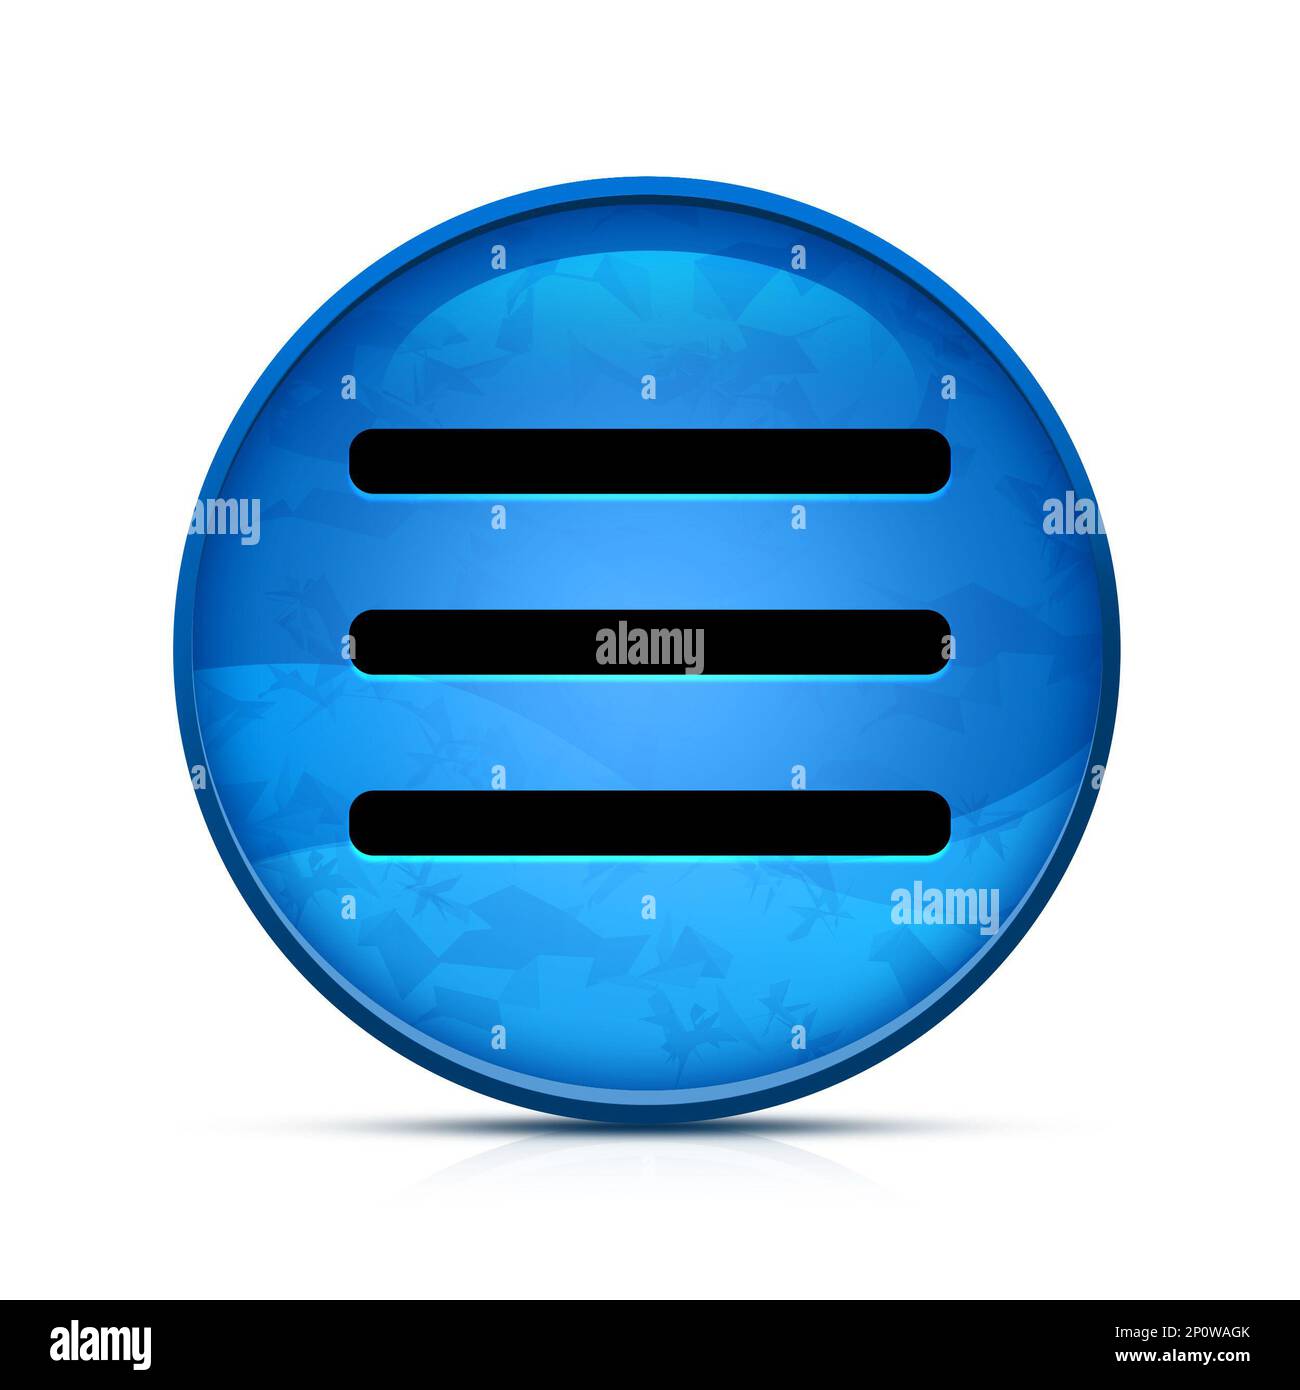 Hamburger menu bar icon on classy splash blue round button Stock Photo